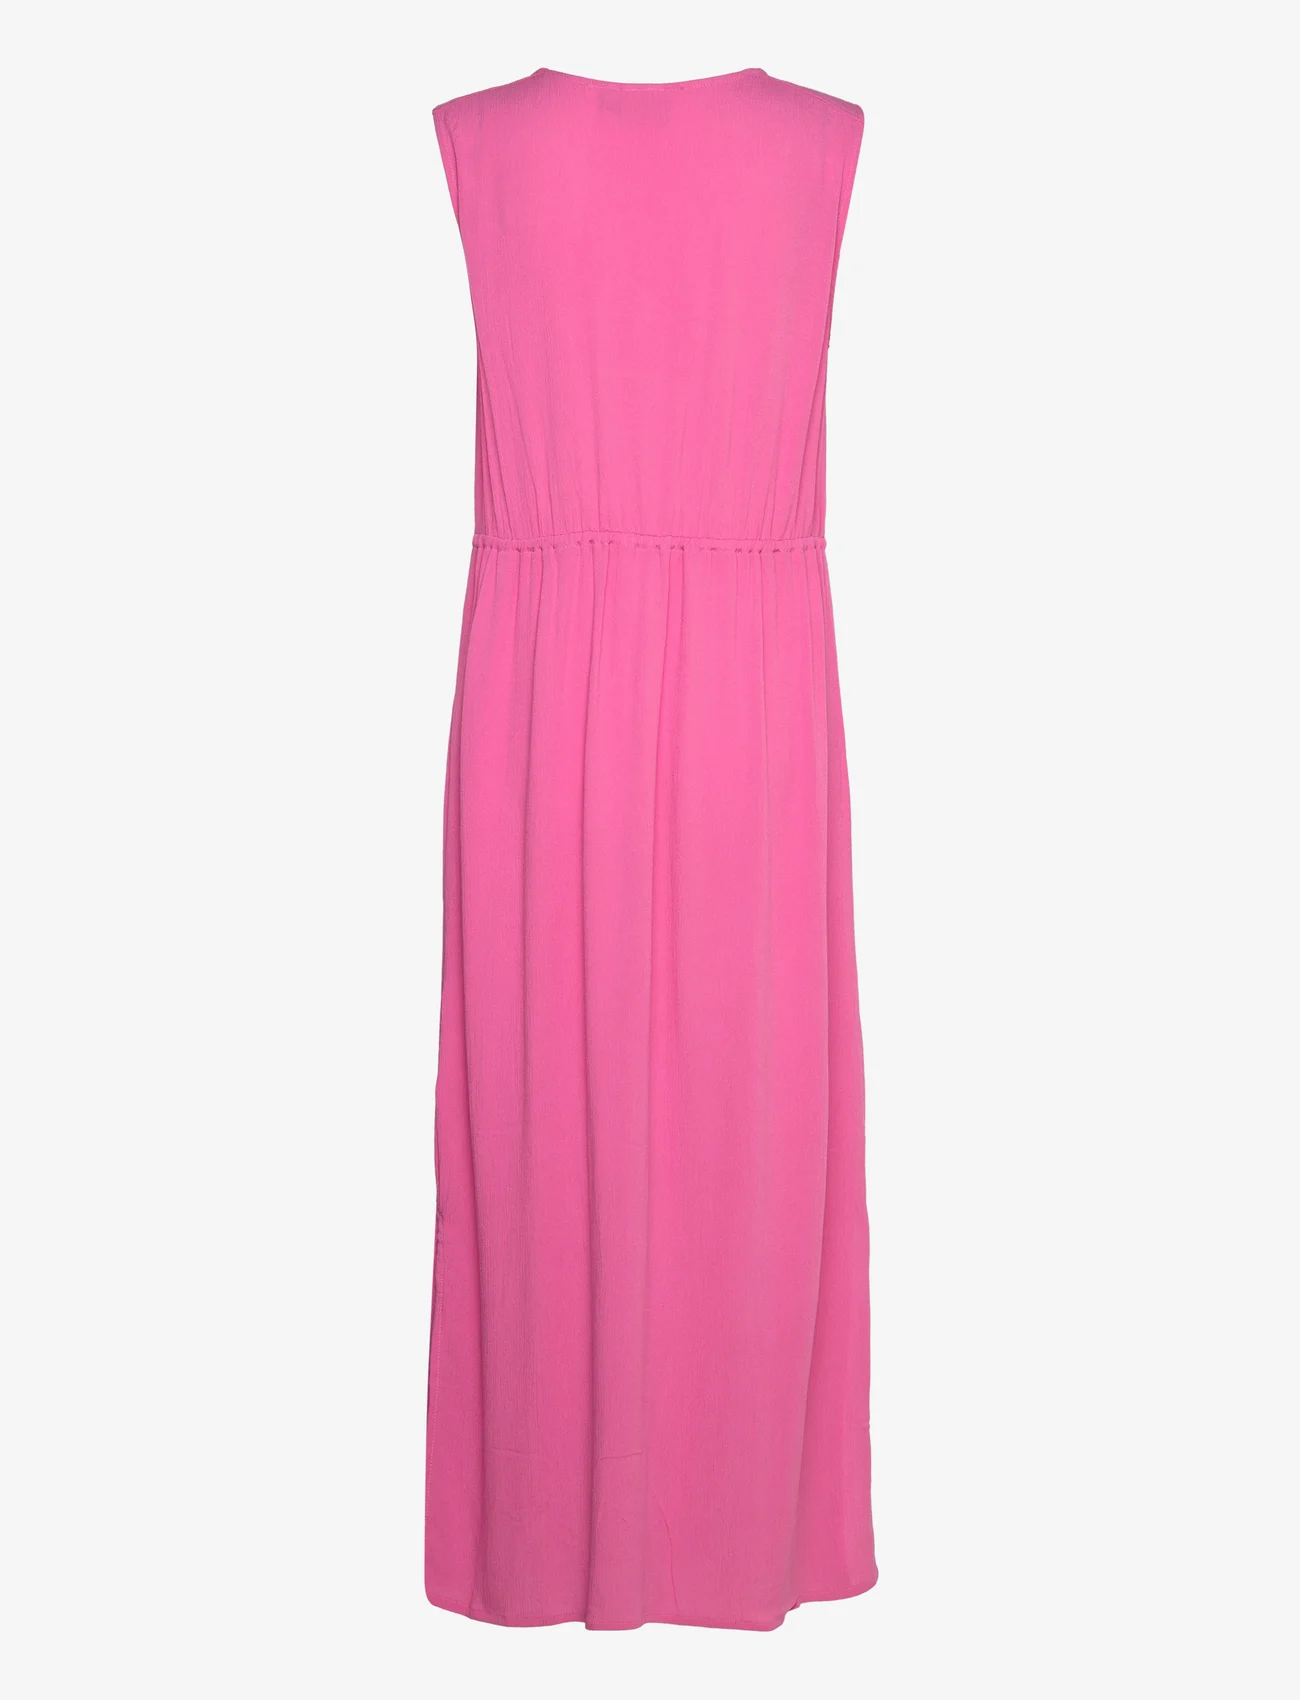 ICHI - IHMARRAKECH SO DR10 - summer dresses - super pink - 1